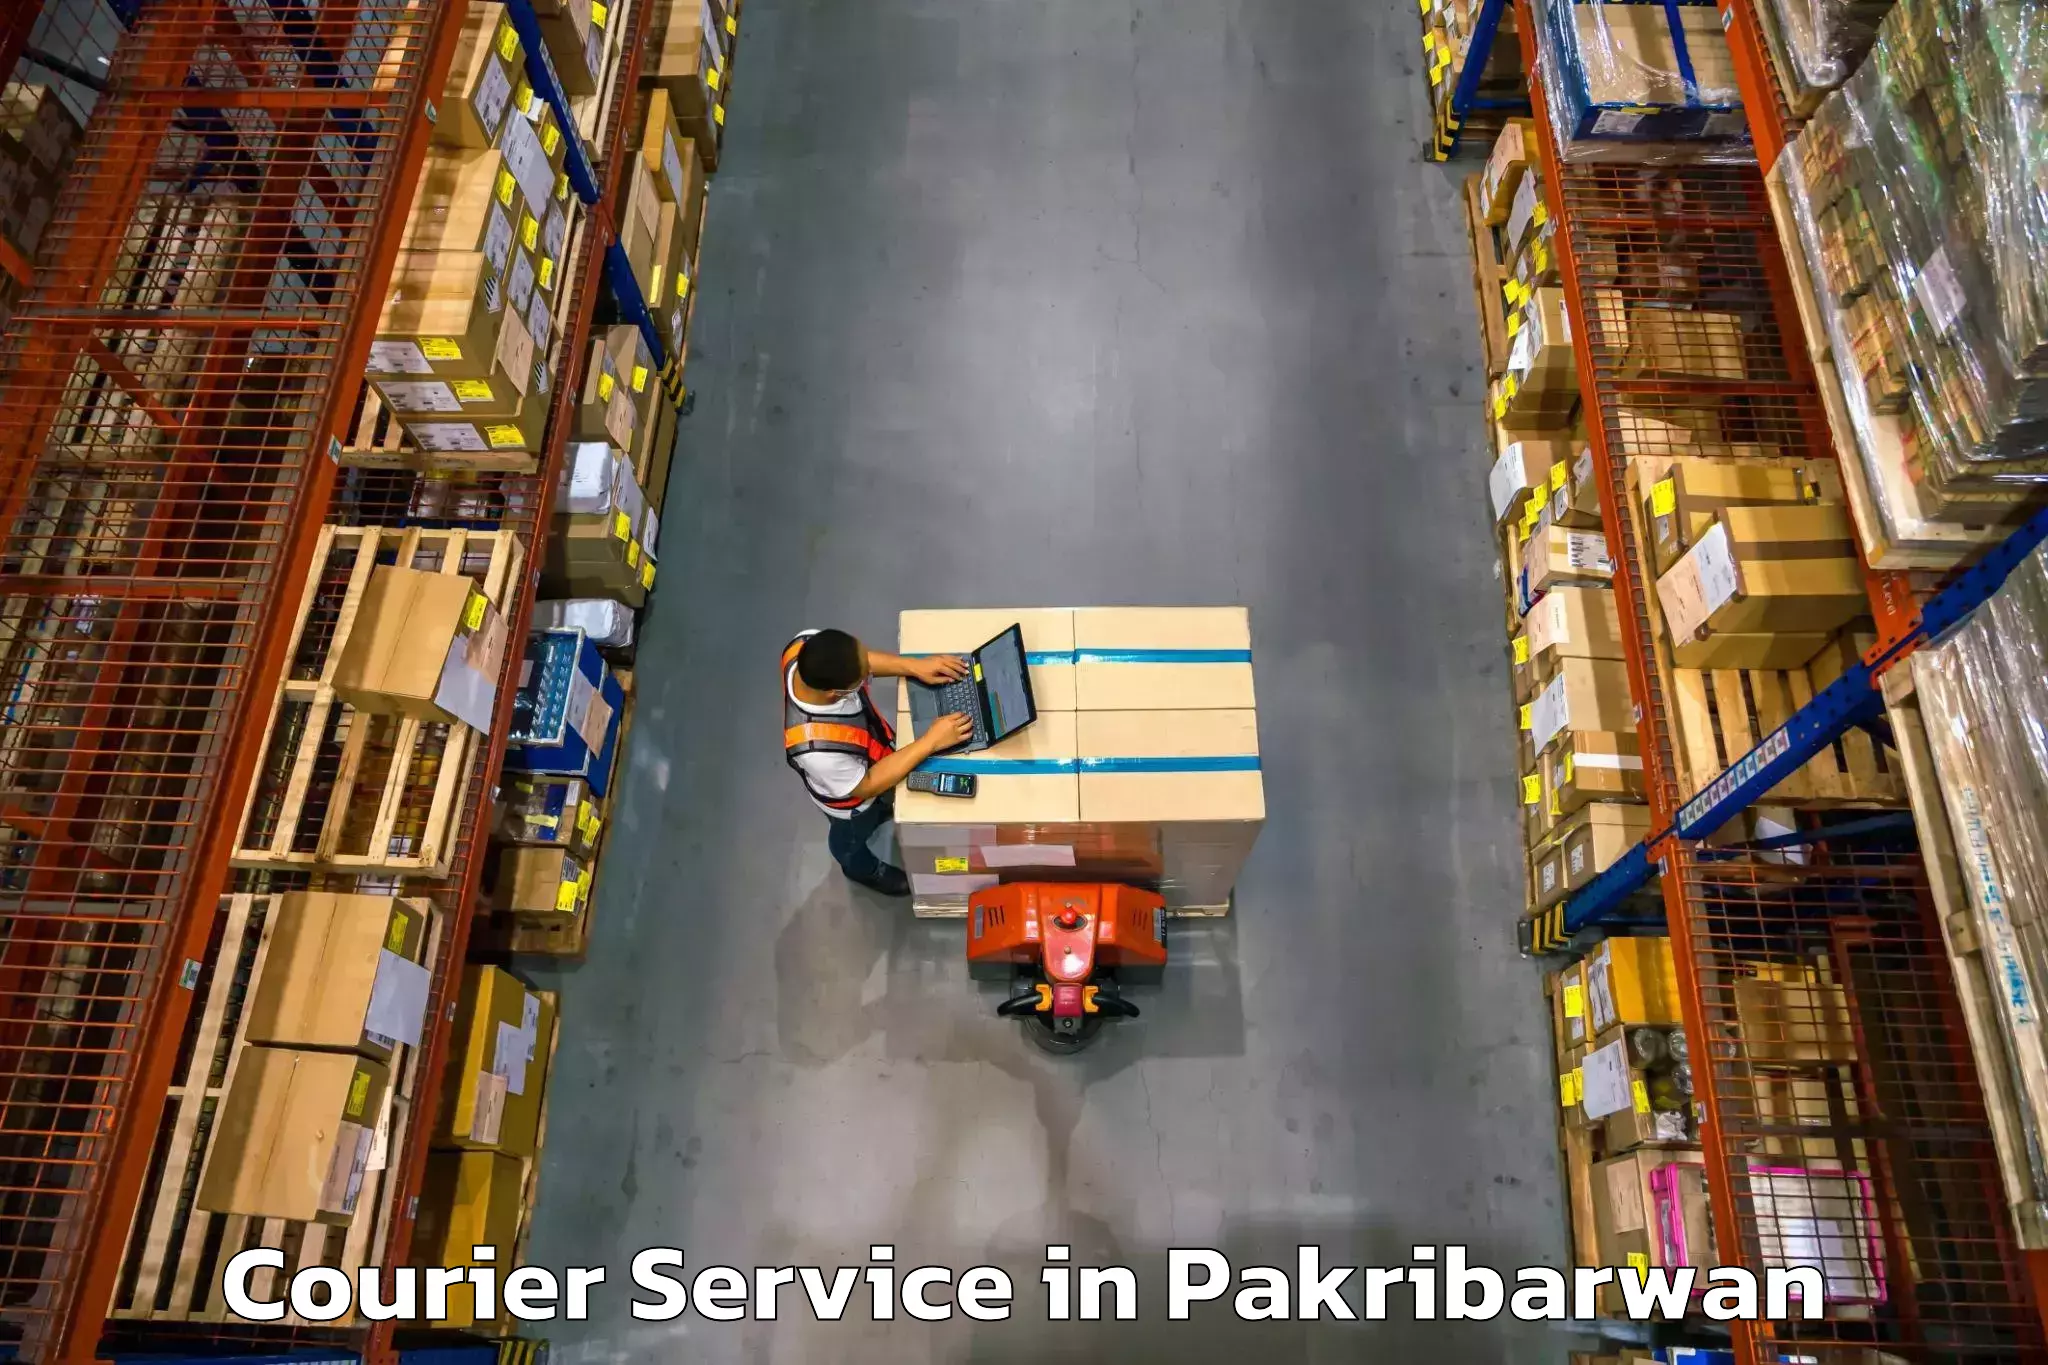 Specialized shipment handling in Pakribarwan